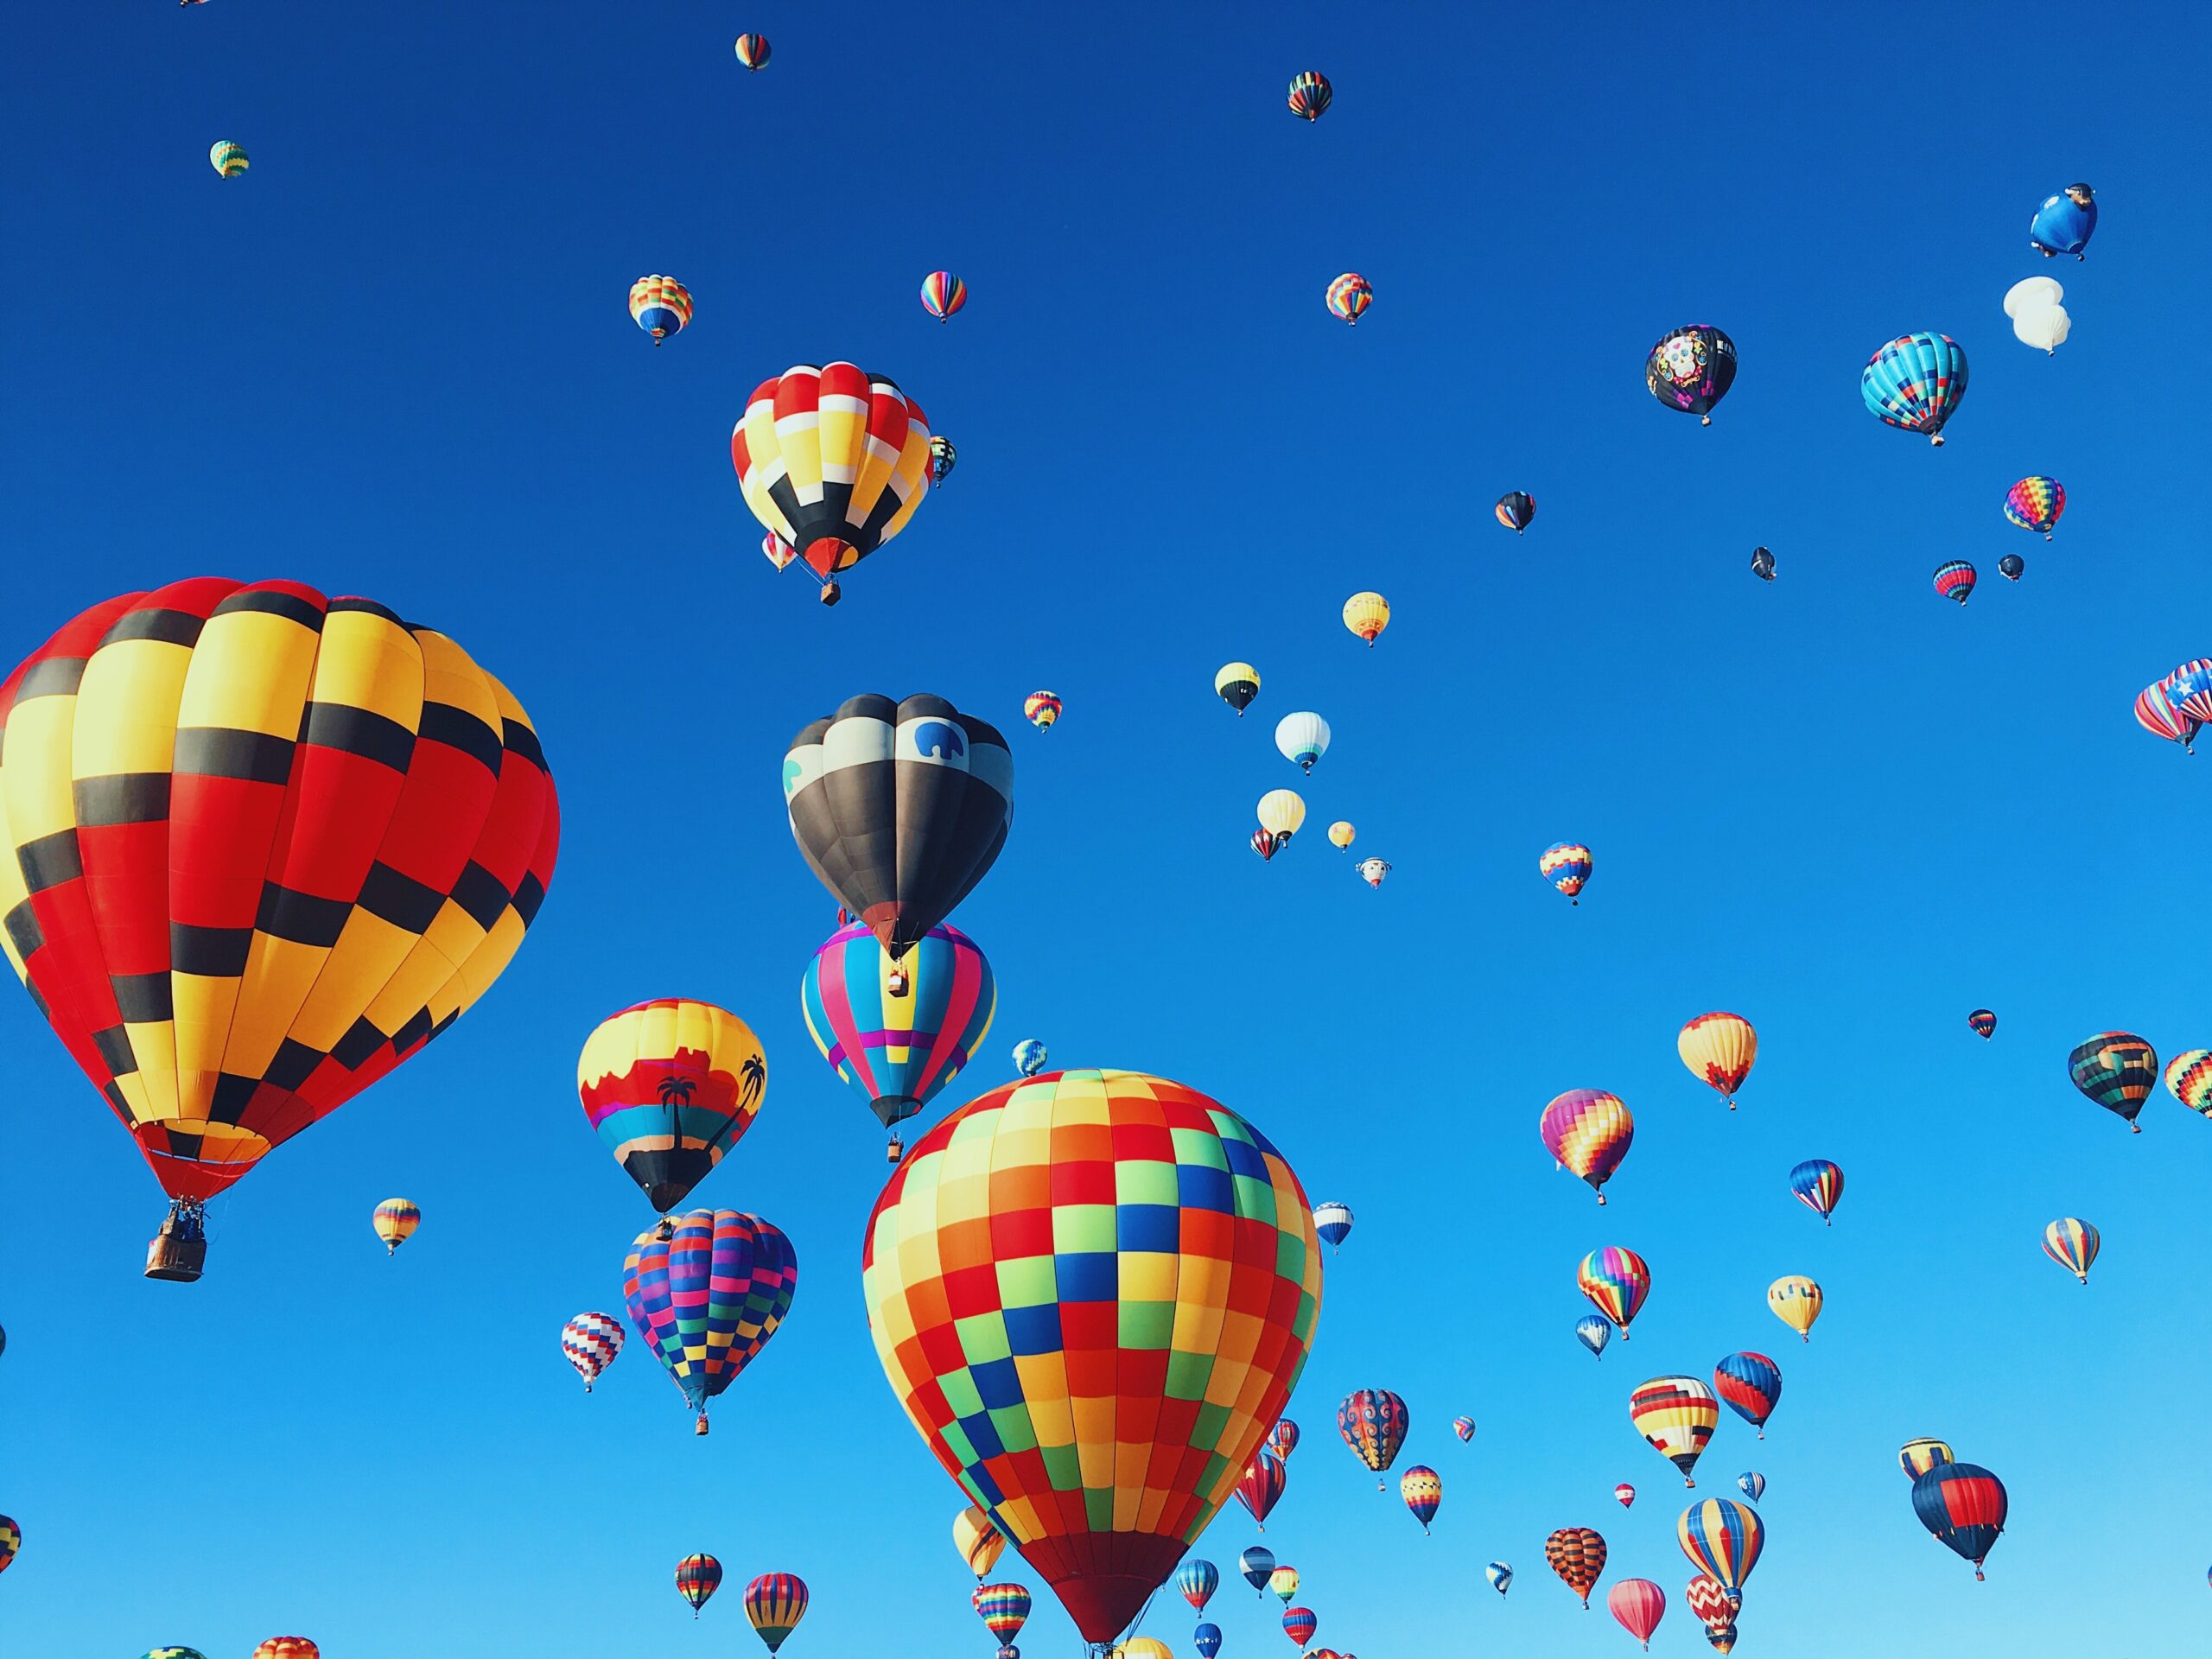 Don't miss the Taos Mountain Balloon Rally